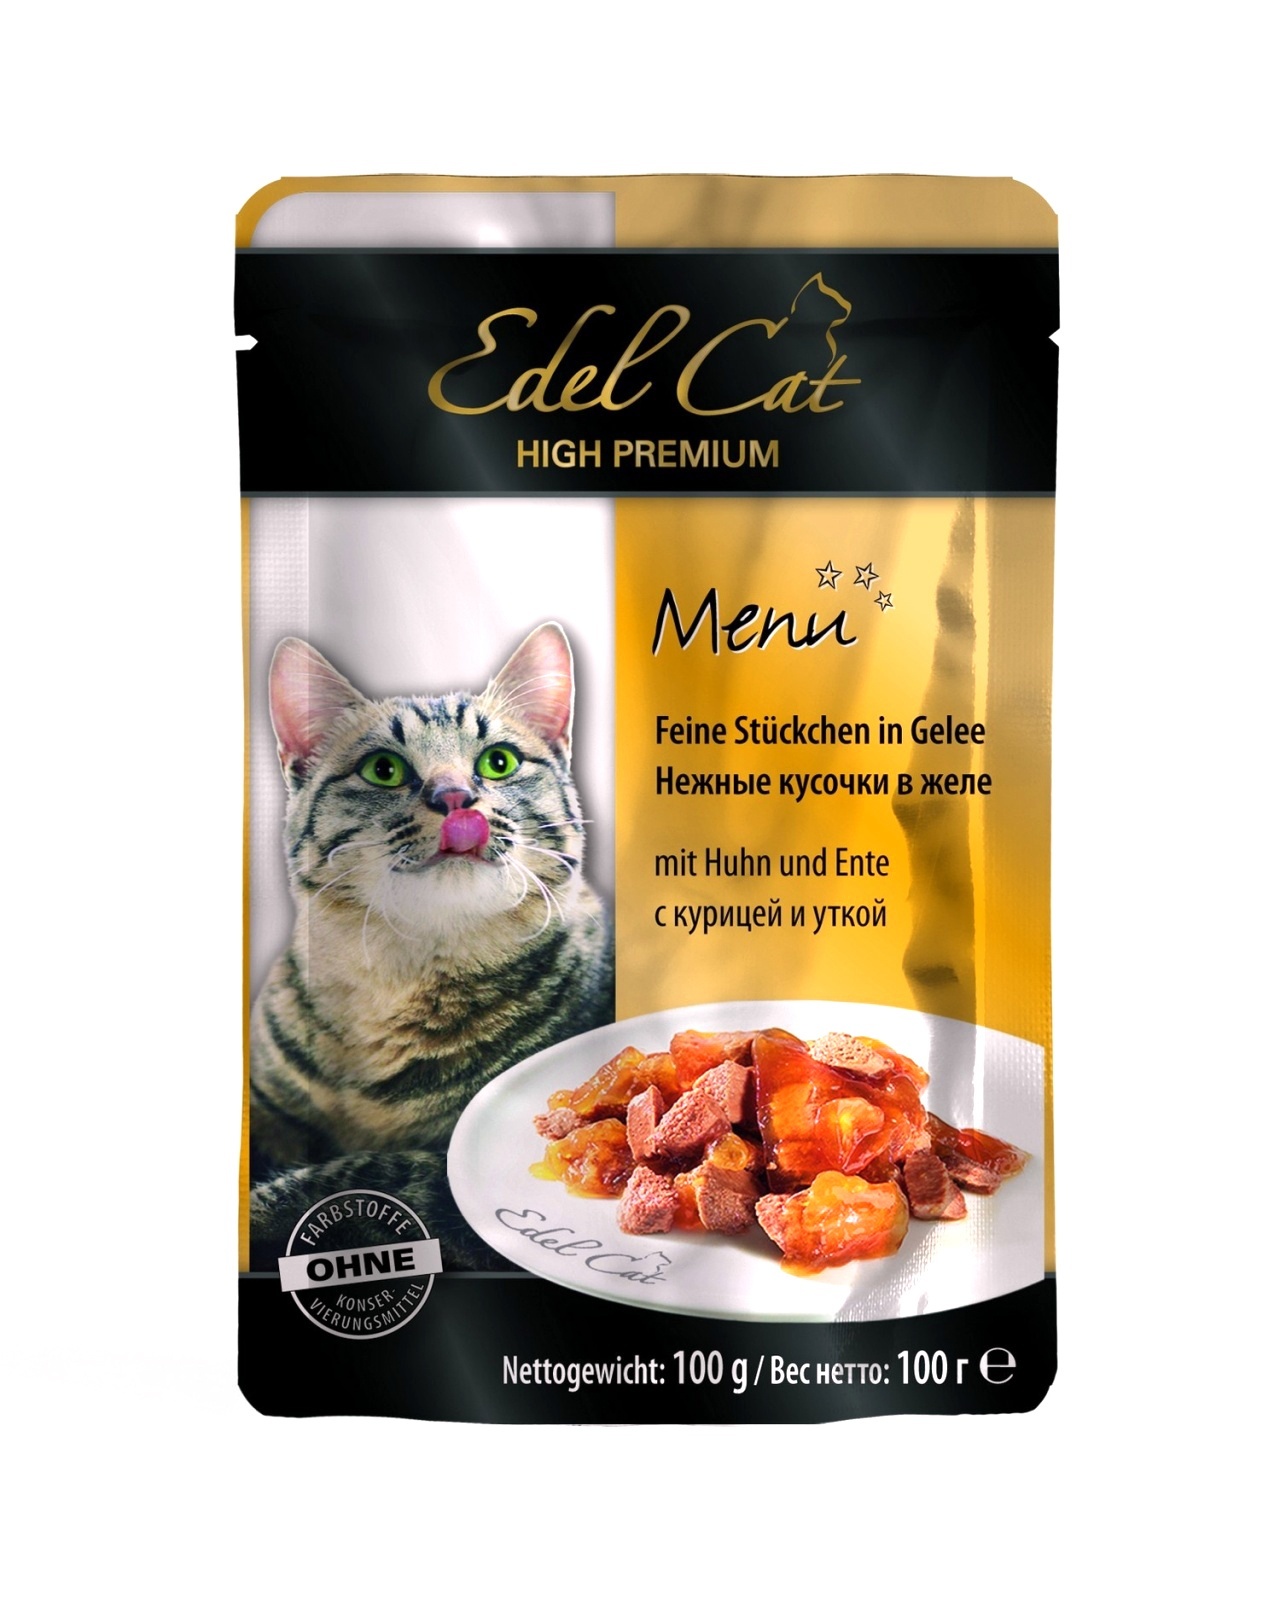 Edel Cat паучи Кусочки в желе с курицей и уткой (100 г) Edel Cat Edel Cat паучи Кусочки в желе с курицей и уткой (100 г) - фото 1